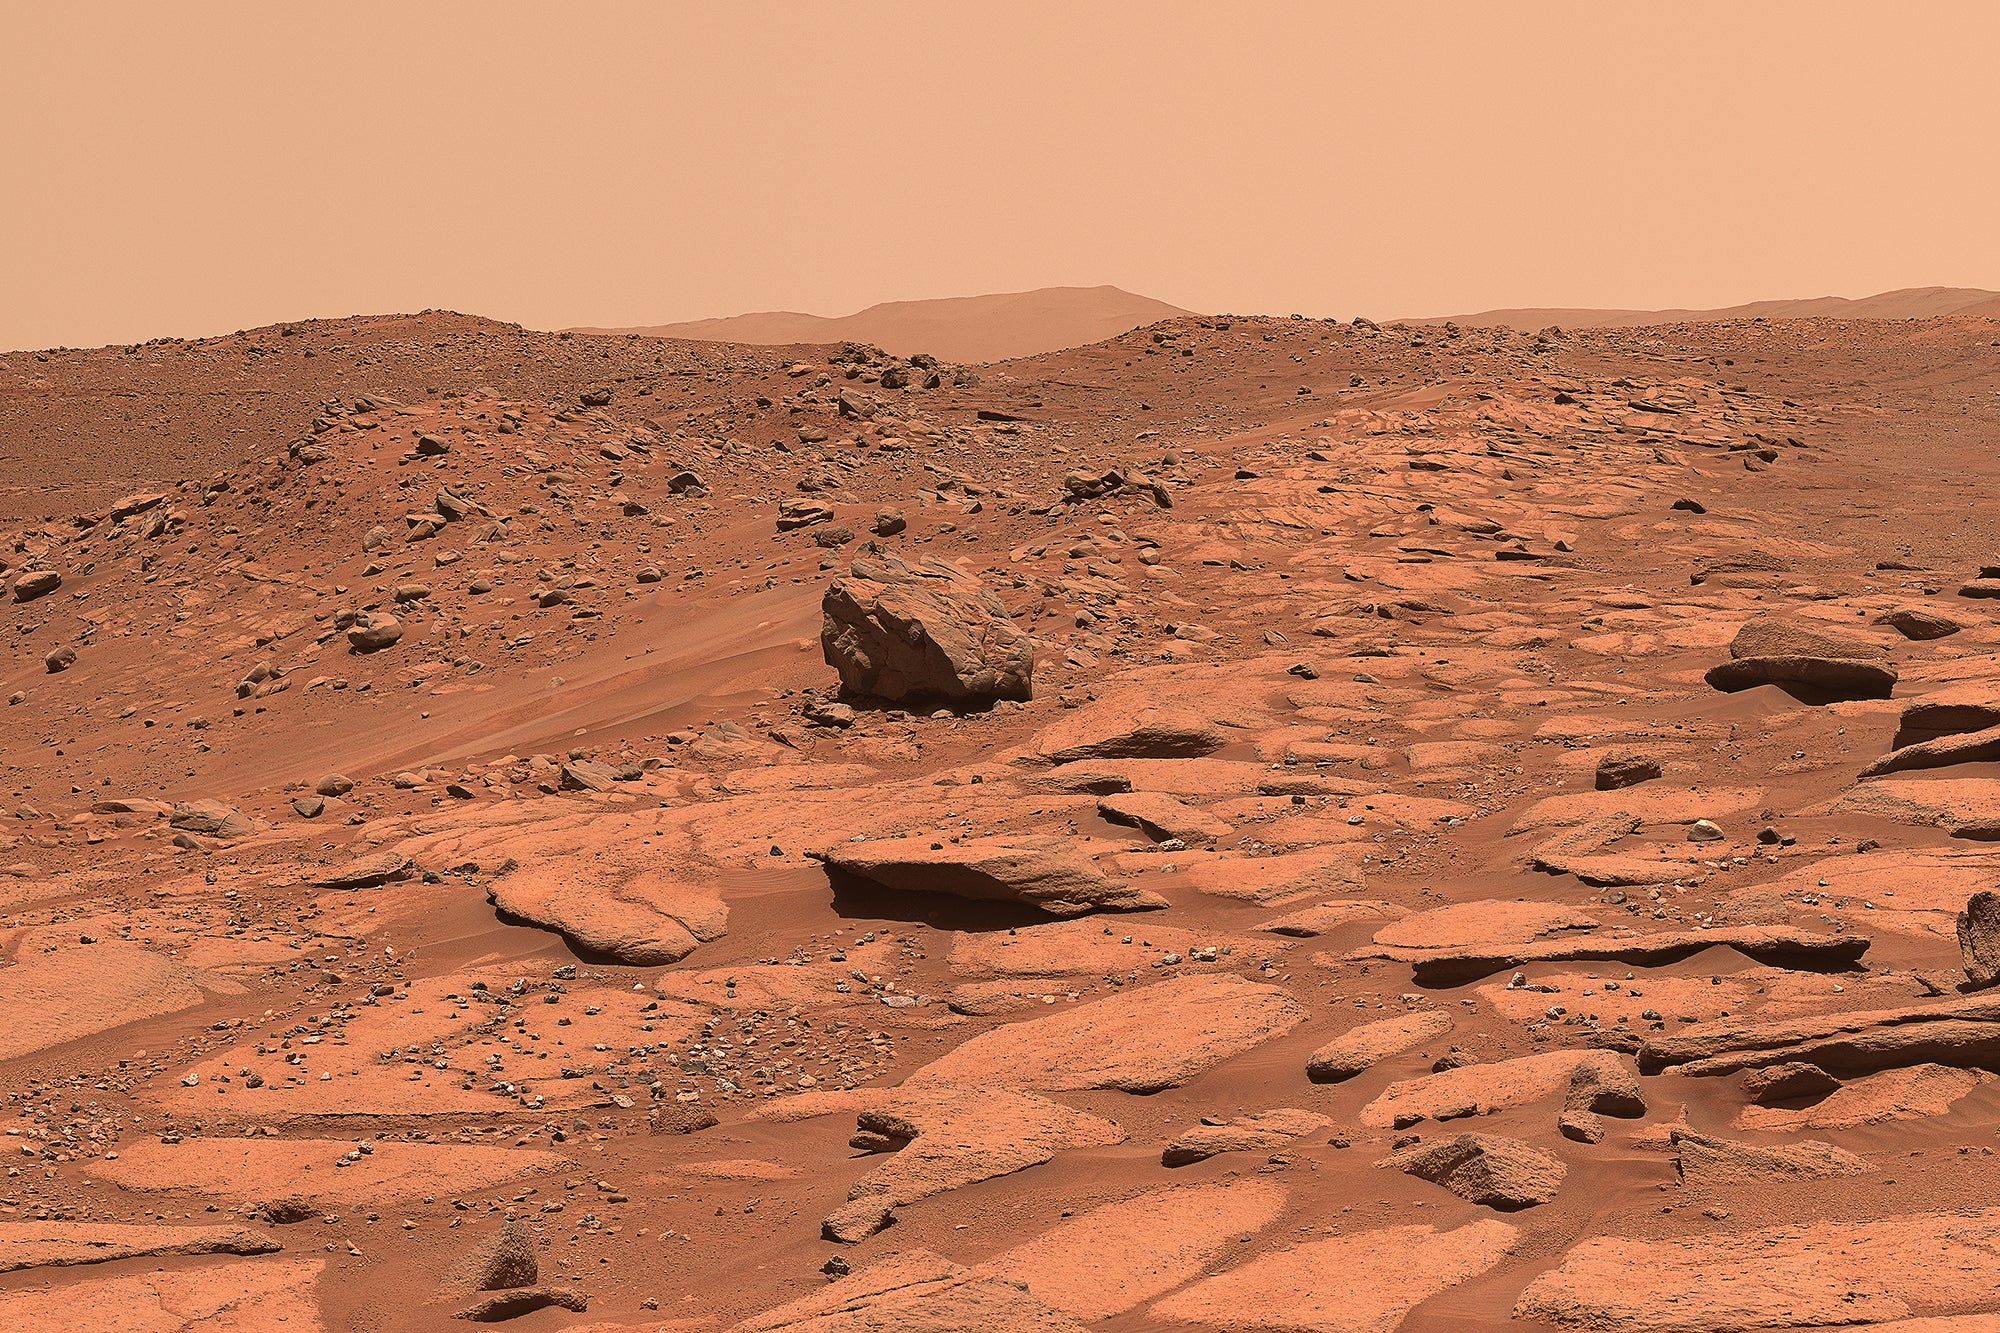 The Echo Creek rocky outcrop on Mars.